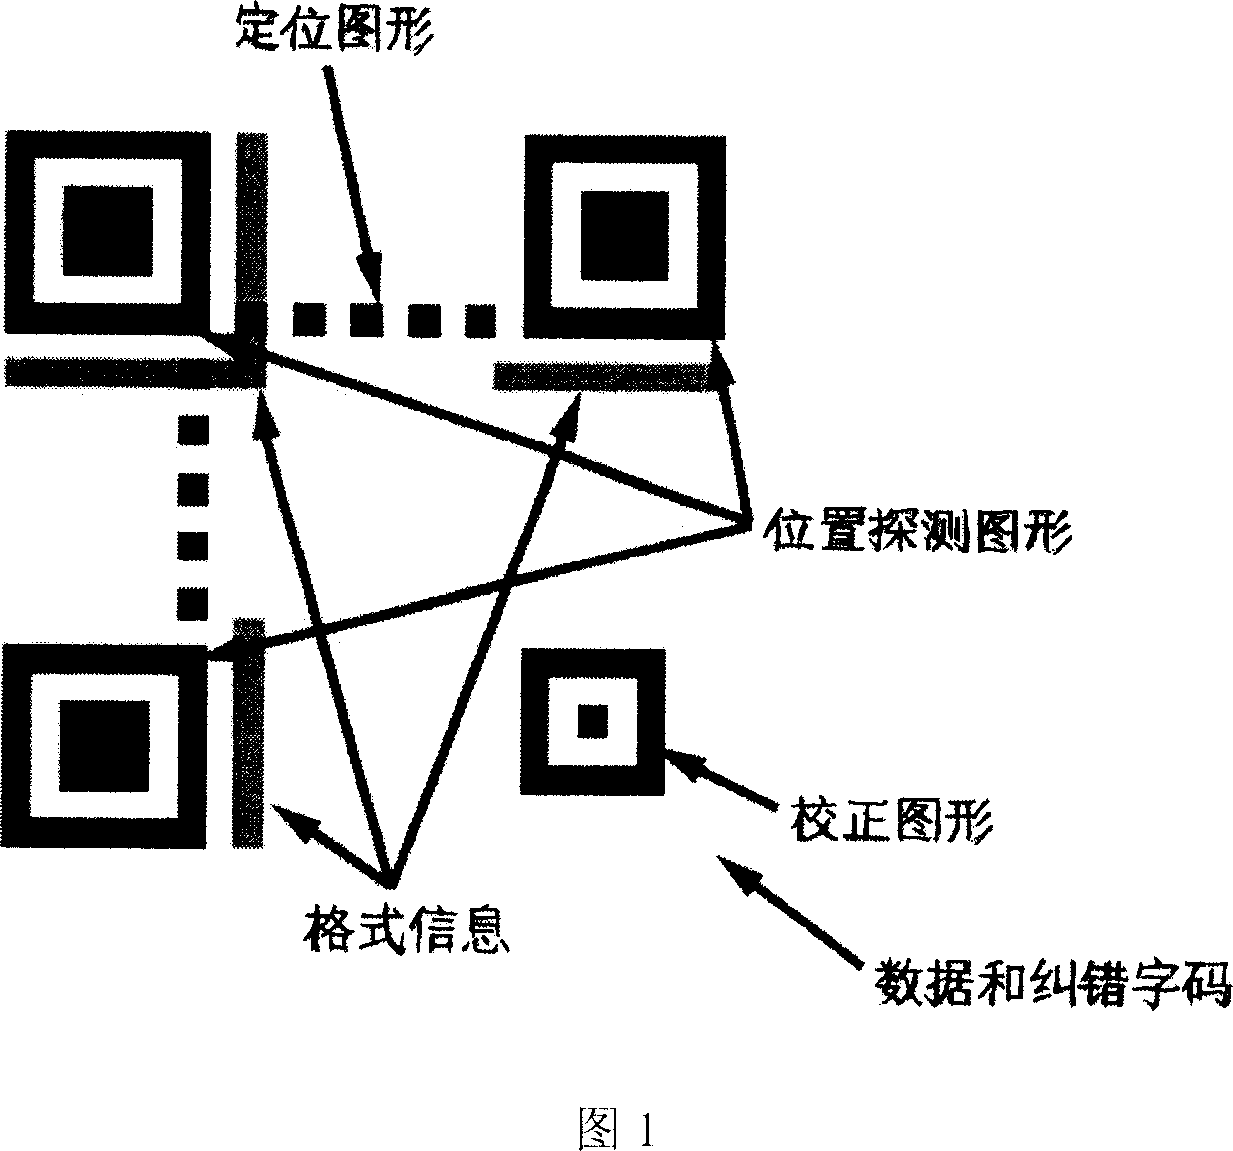 Precise location method of QR code image symbol region at complex background